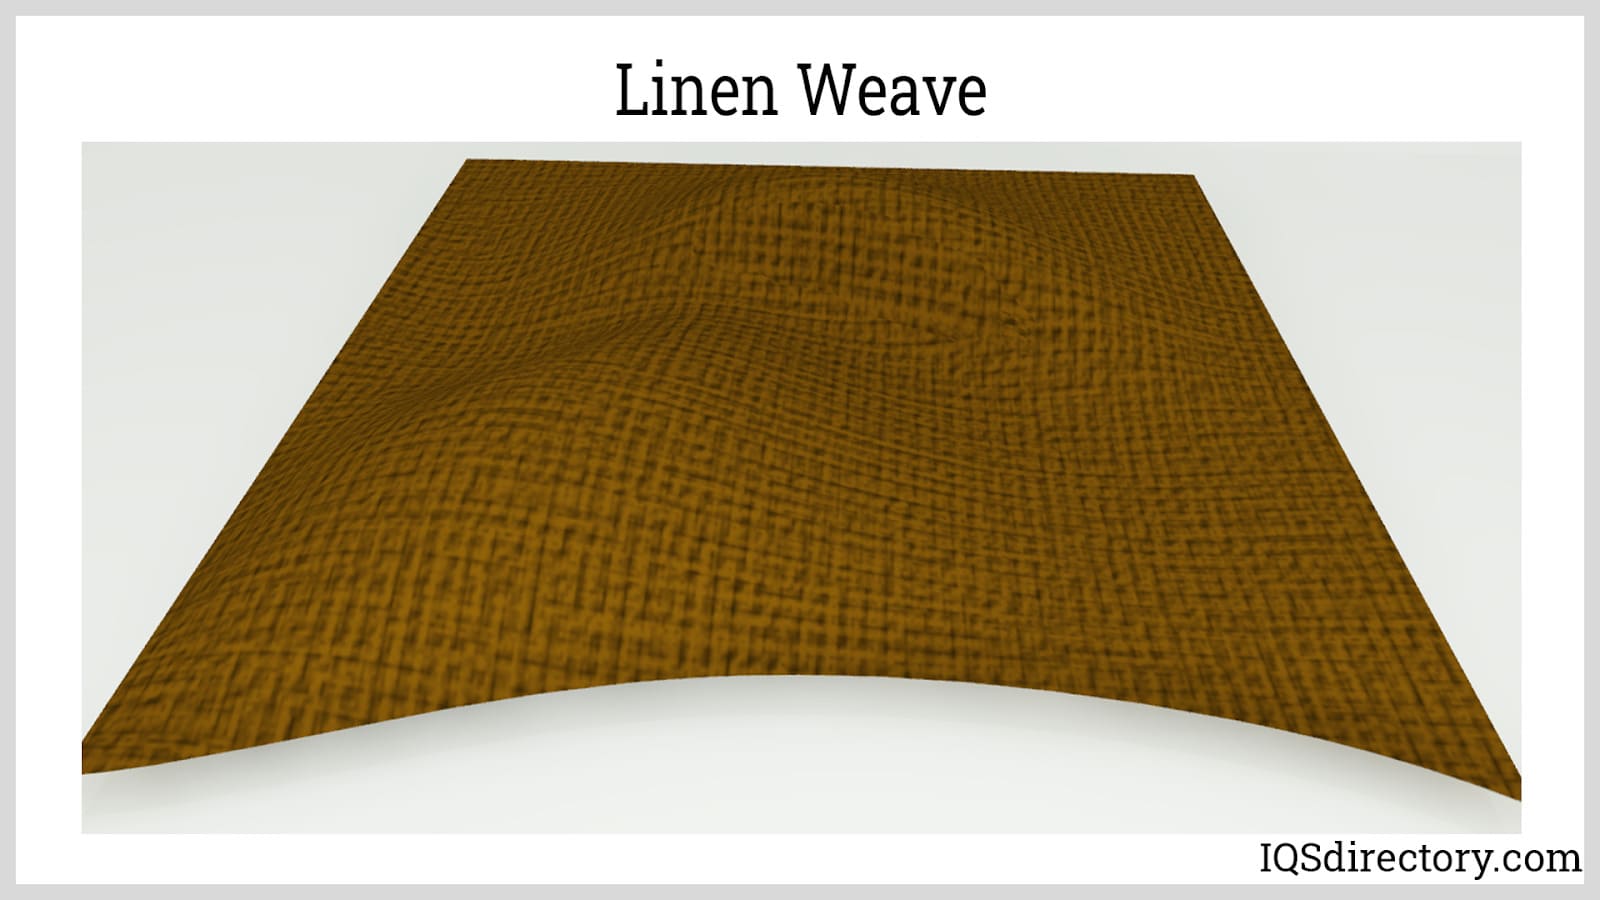 Linen Weave